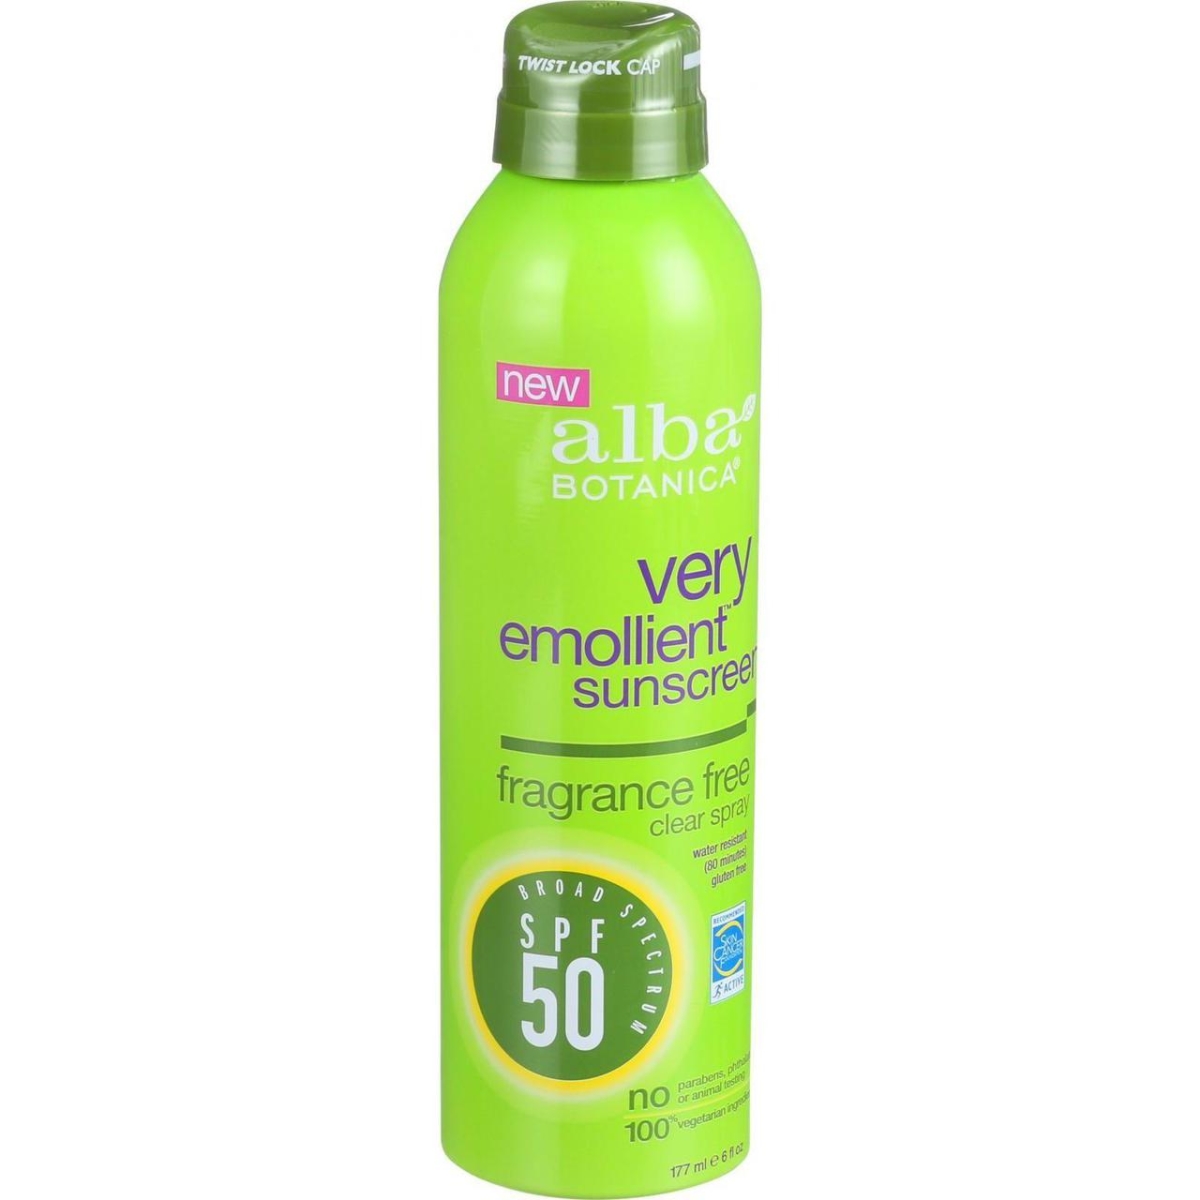 Hg1629294 6 Oz Very Emollient Sunscreen, Clear Spray Spf 50 Fragrance Free